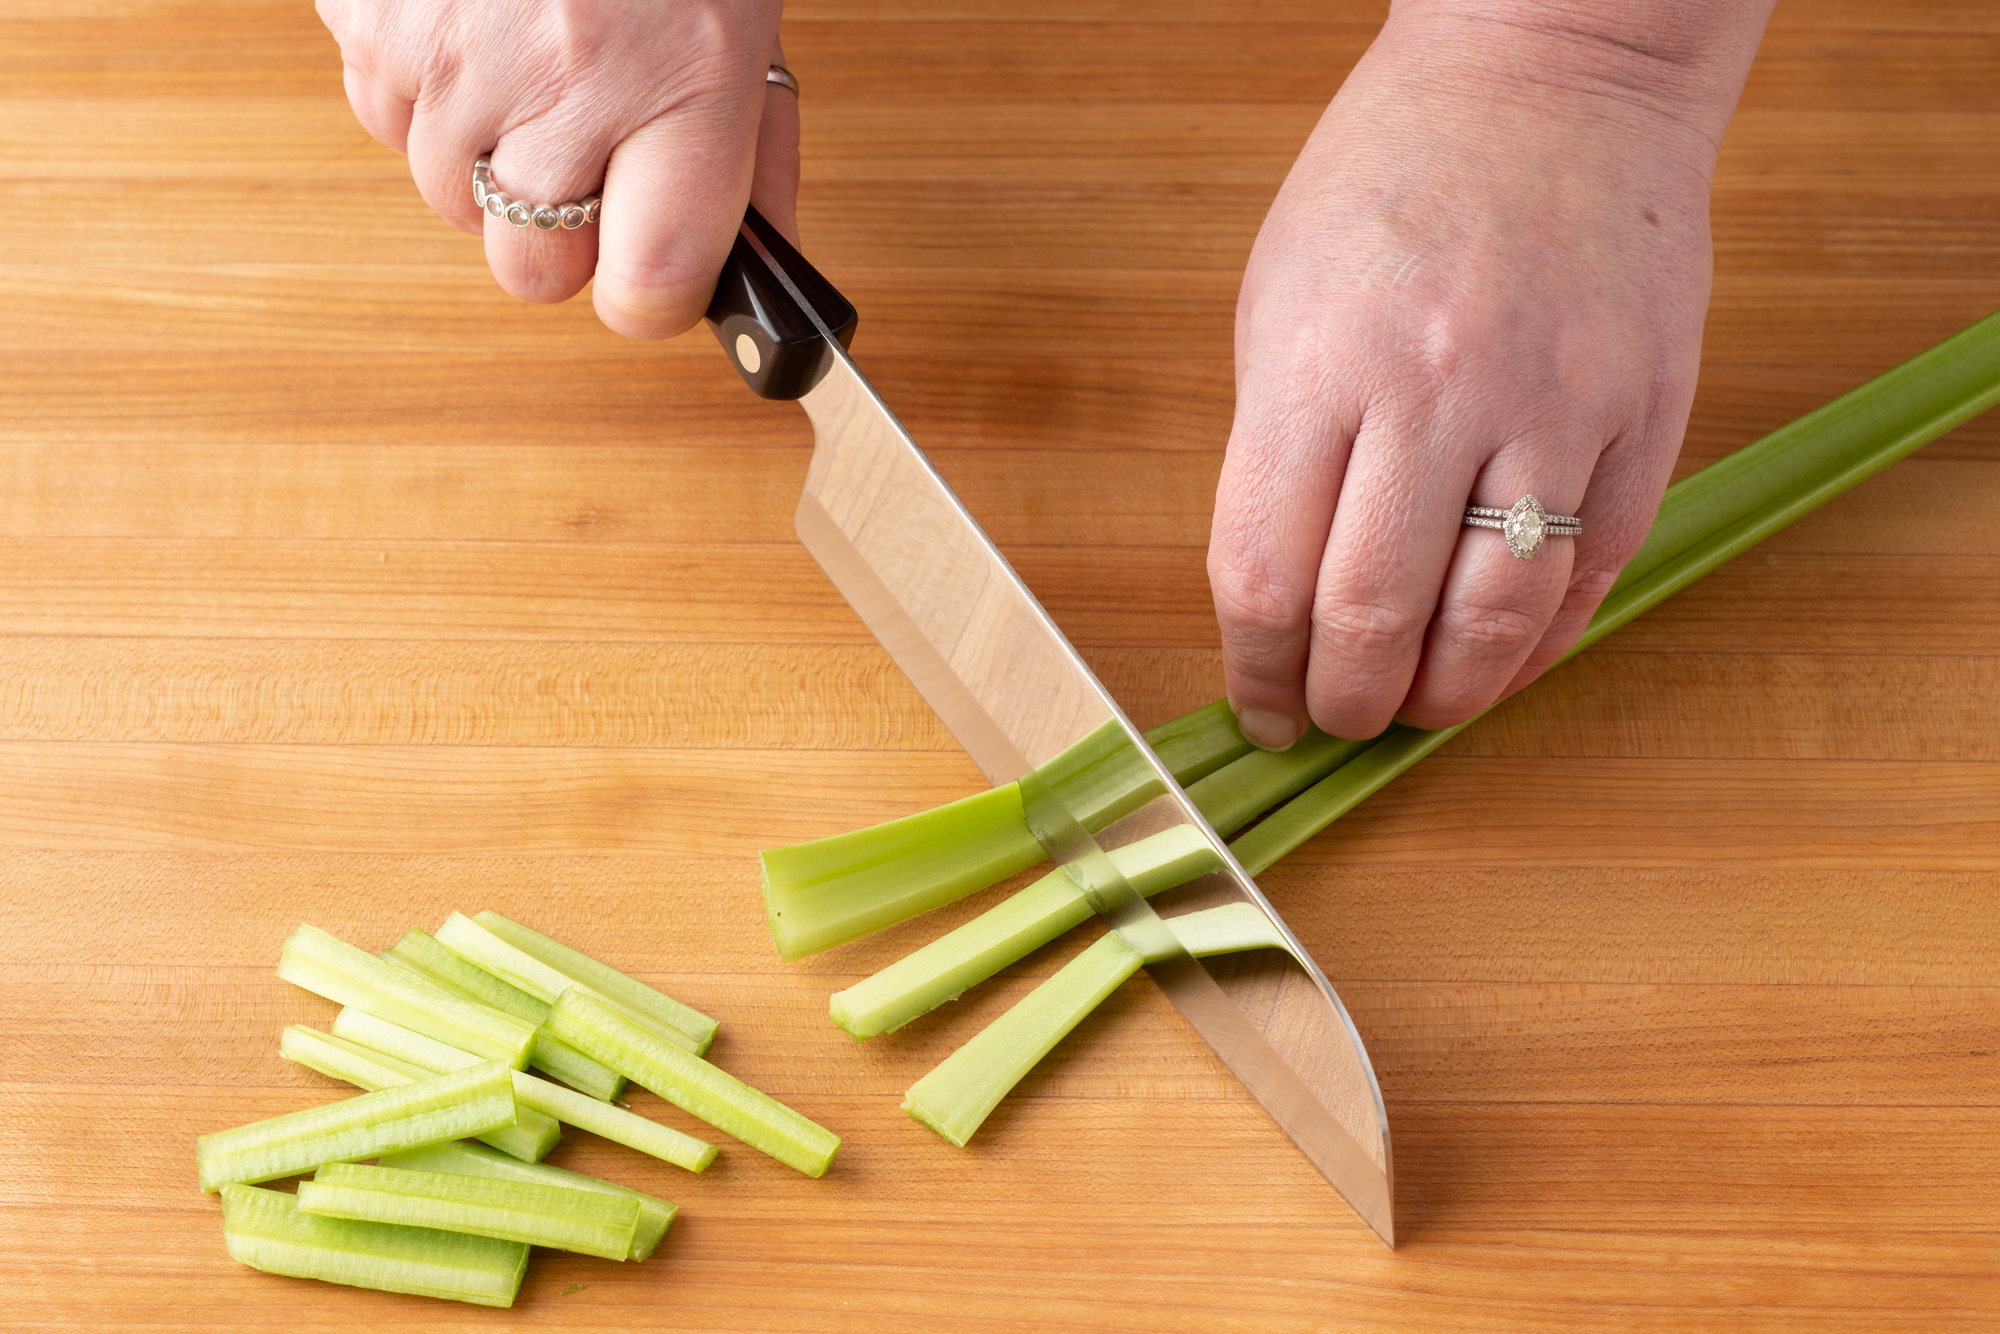 Cutting the celery with a Santoku.